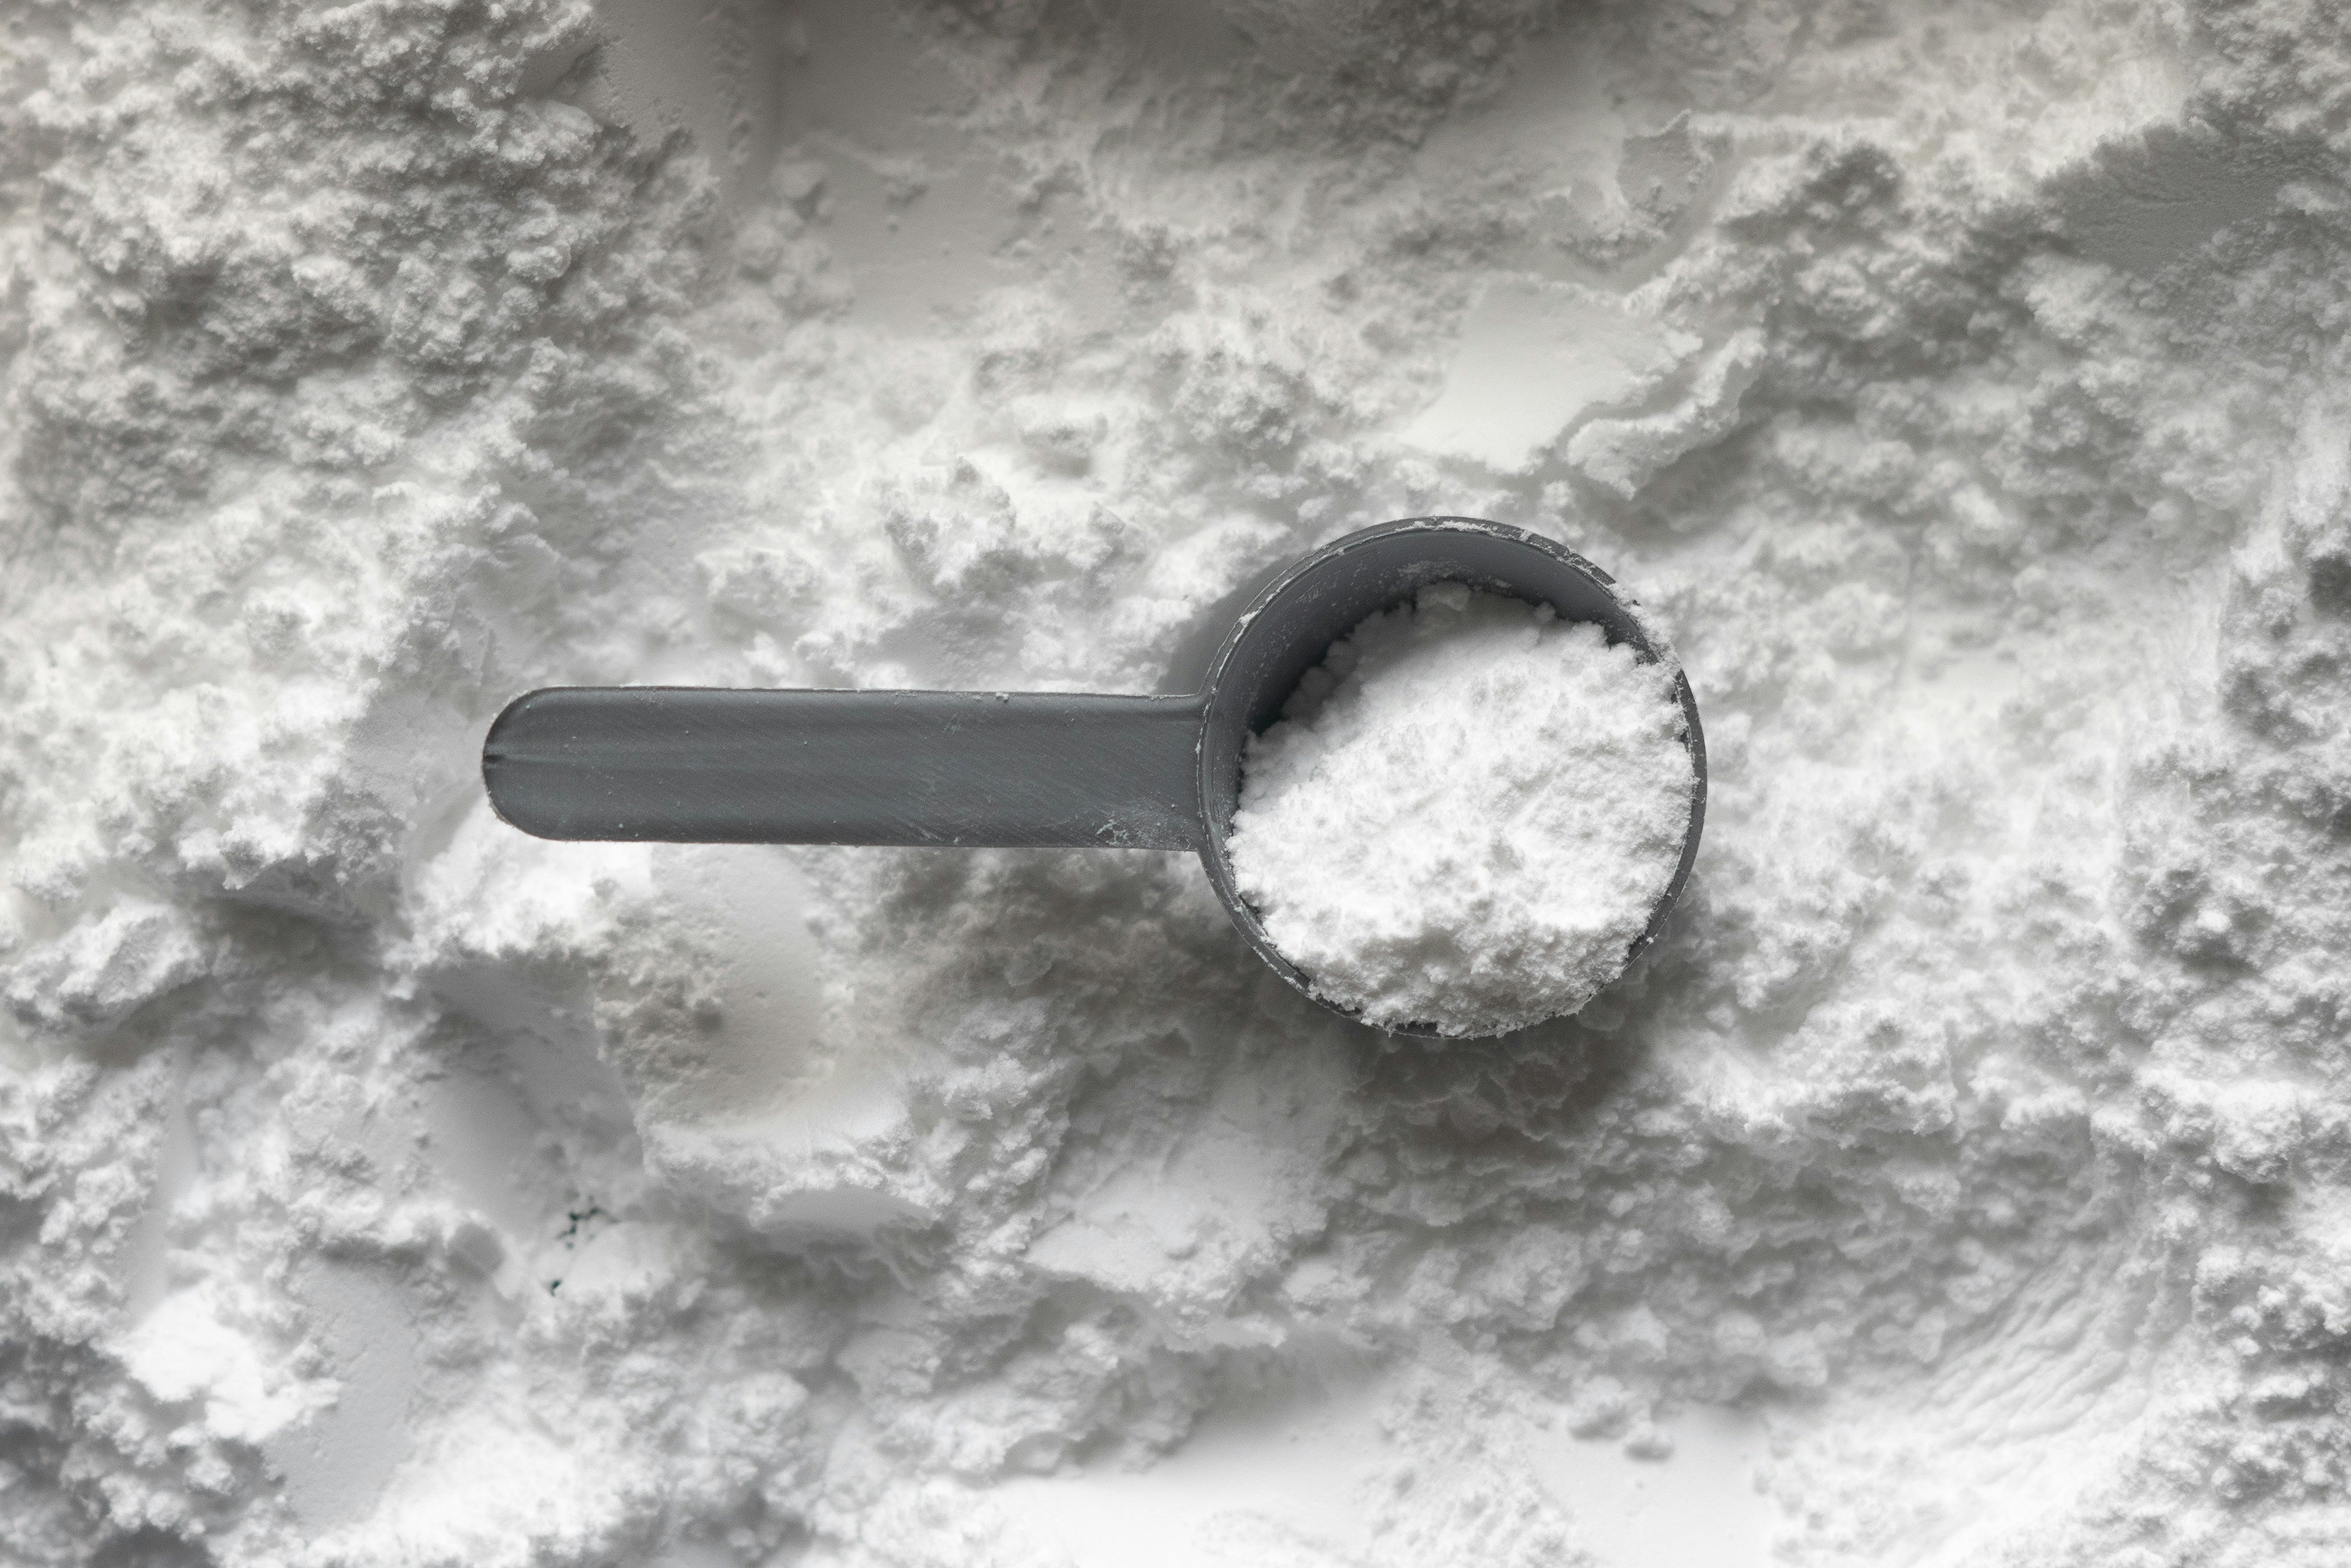 THCA isolate powder